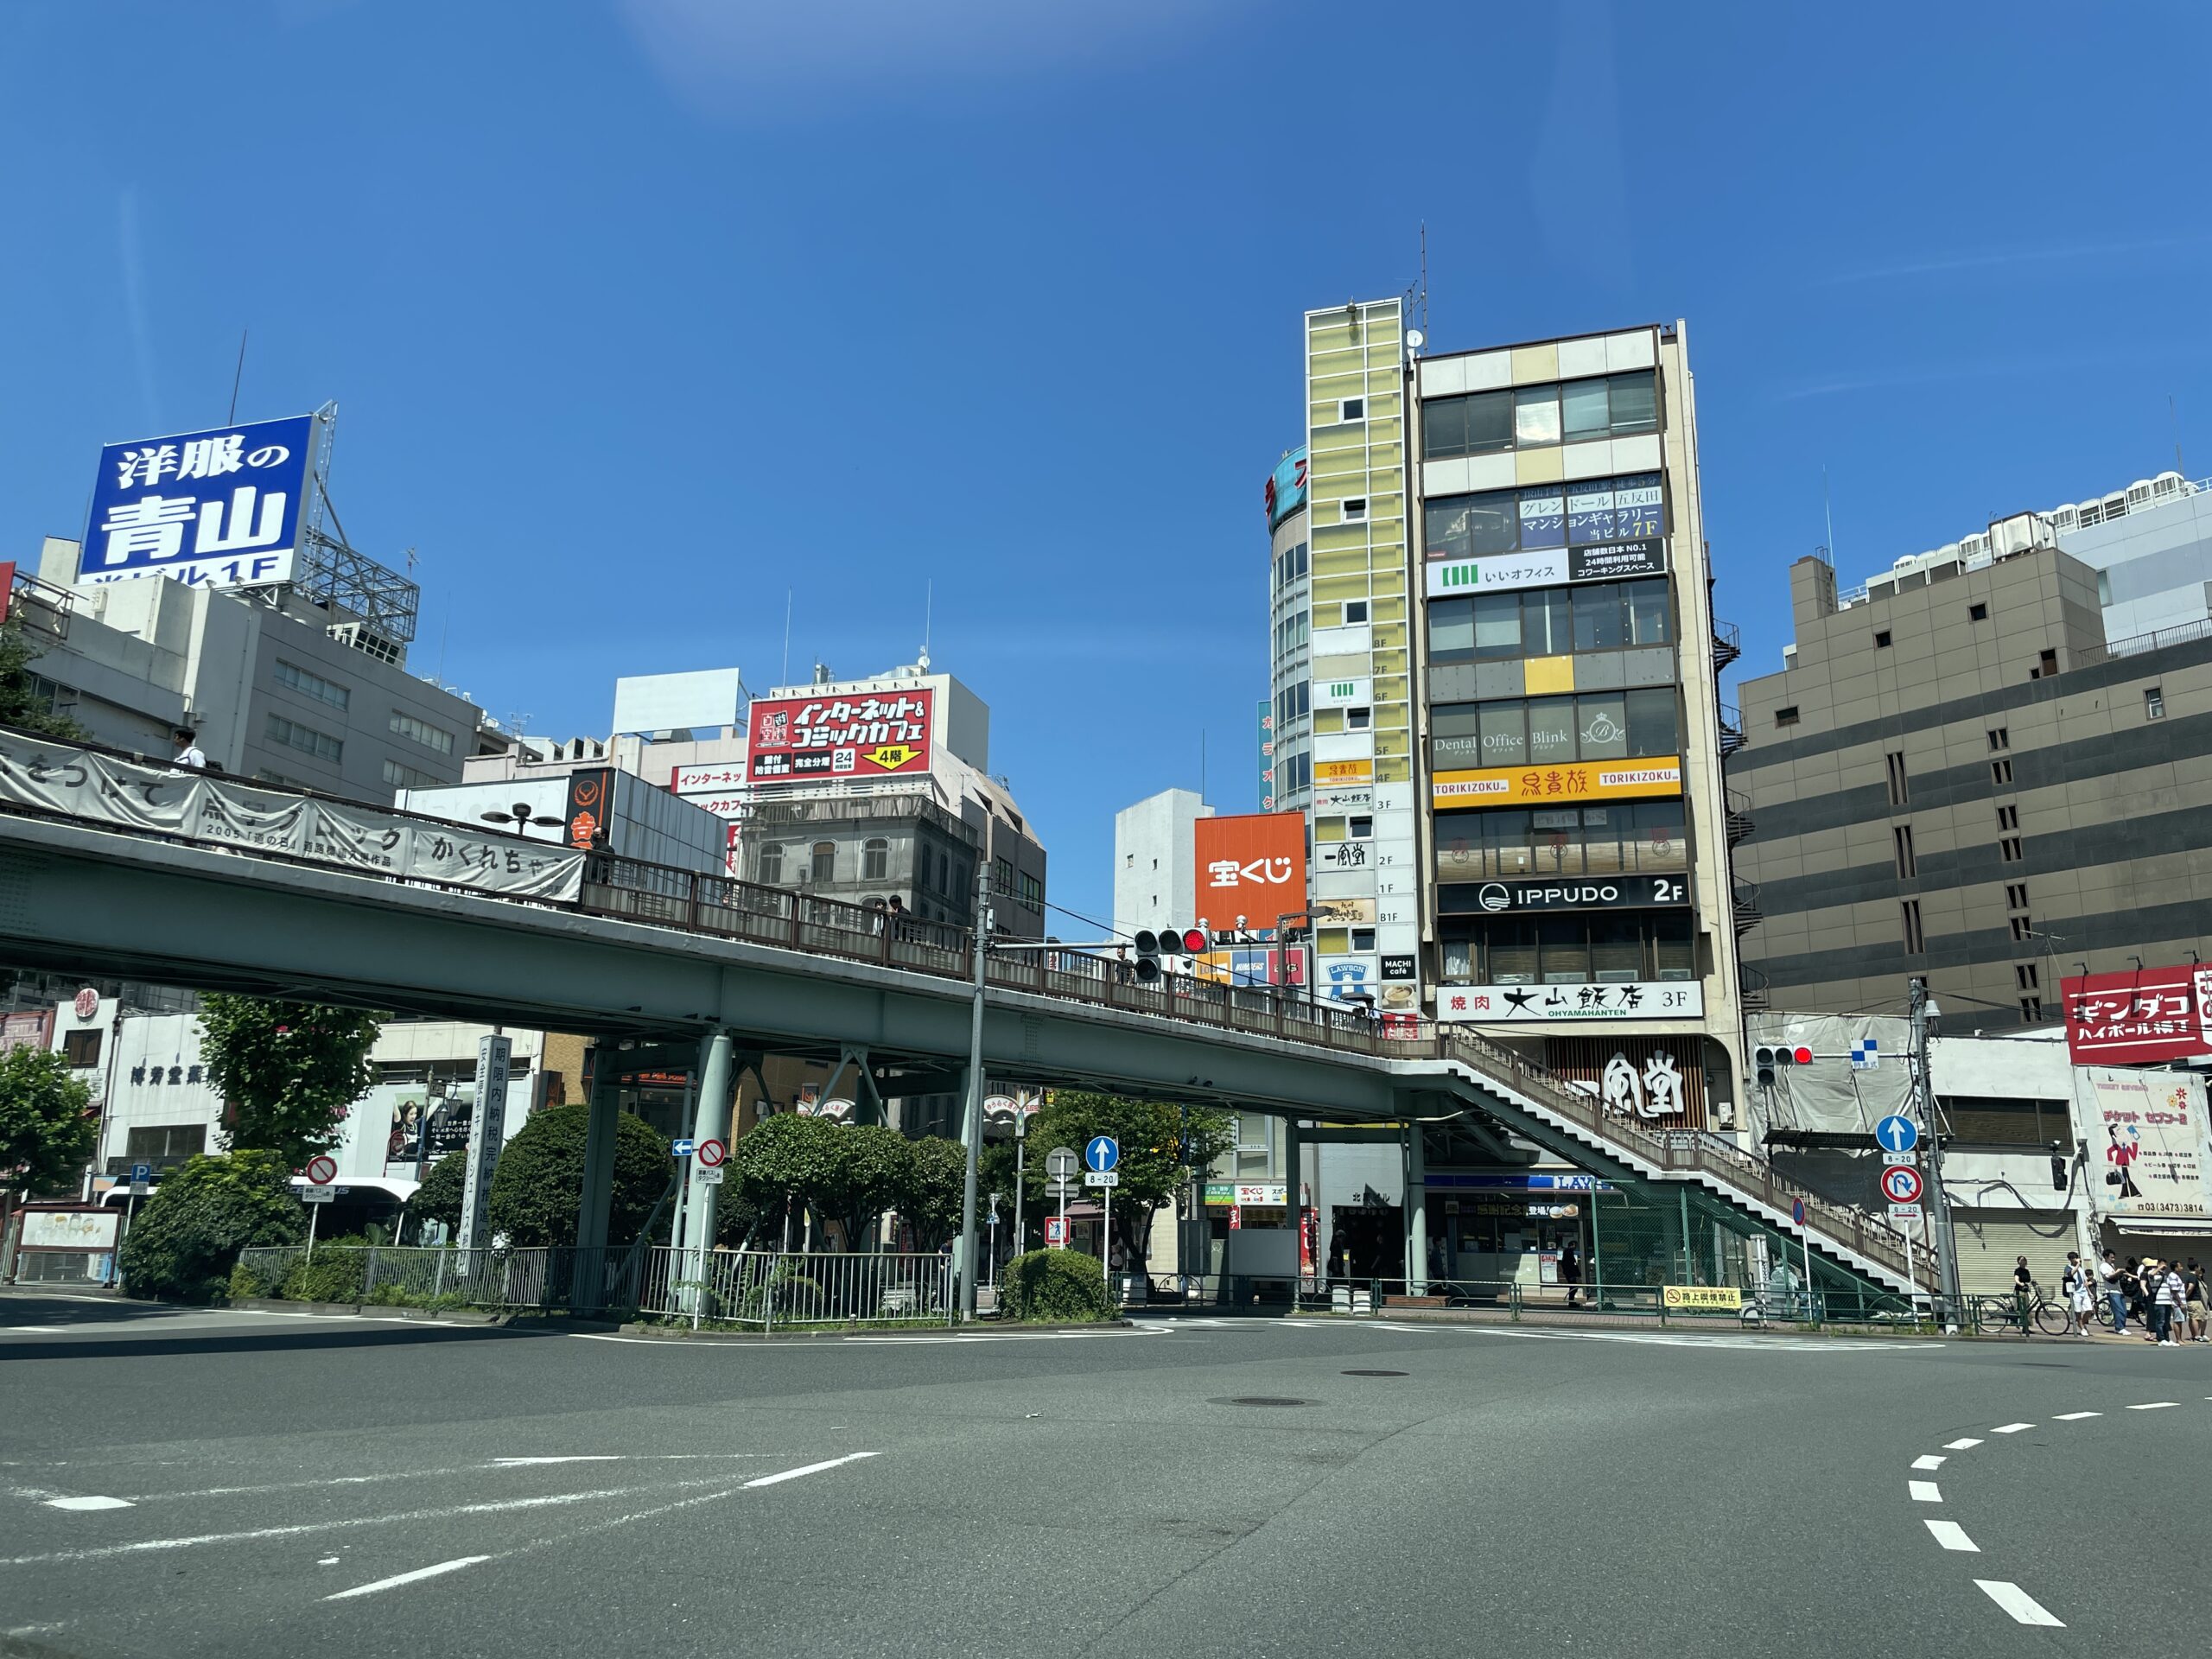 Große Kreuzung vor dem Bahnhof von Gotanda, Shinagawa-ku